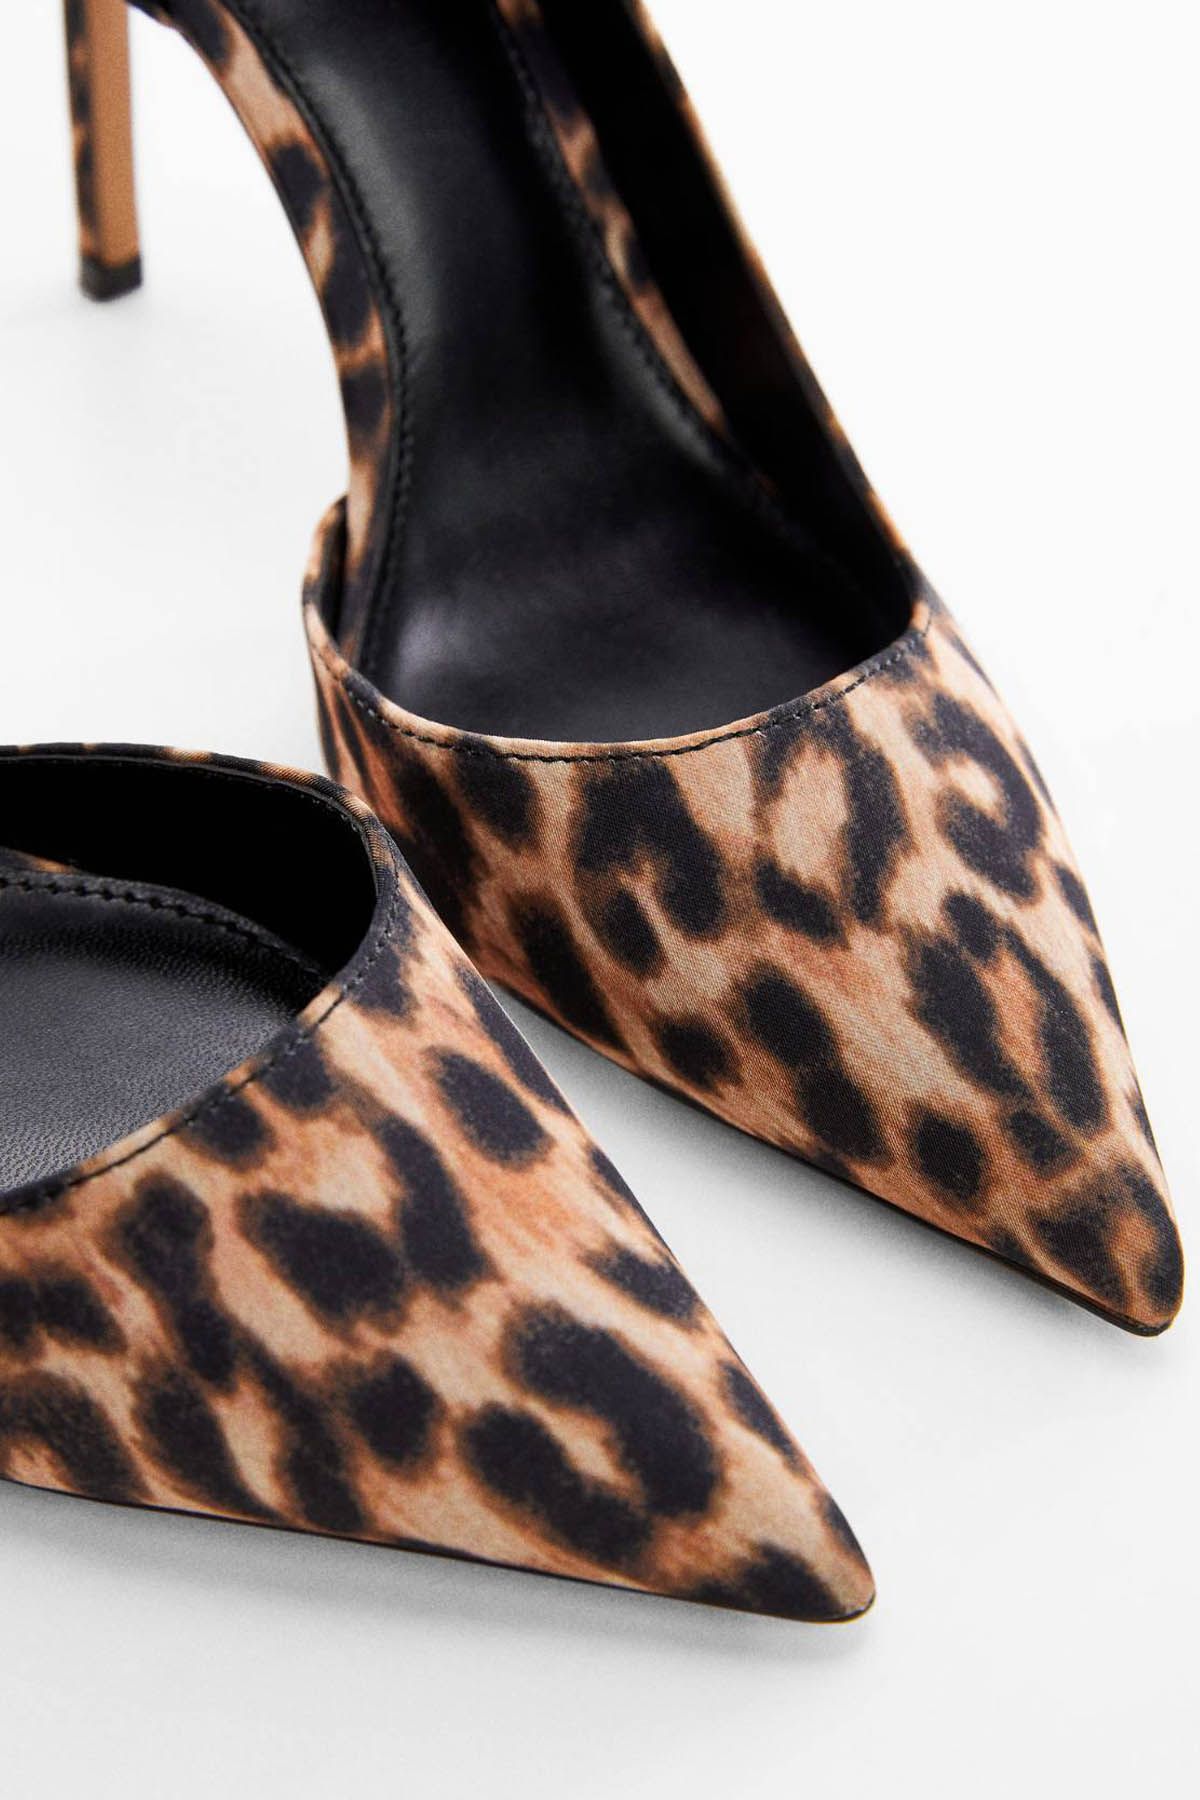 MANGO Animal Print High Heel Shoes Brown Women Heels